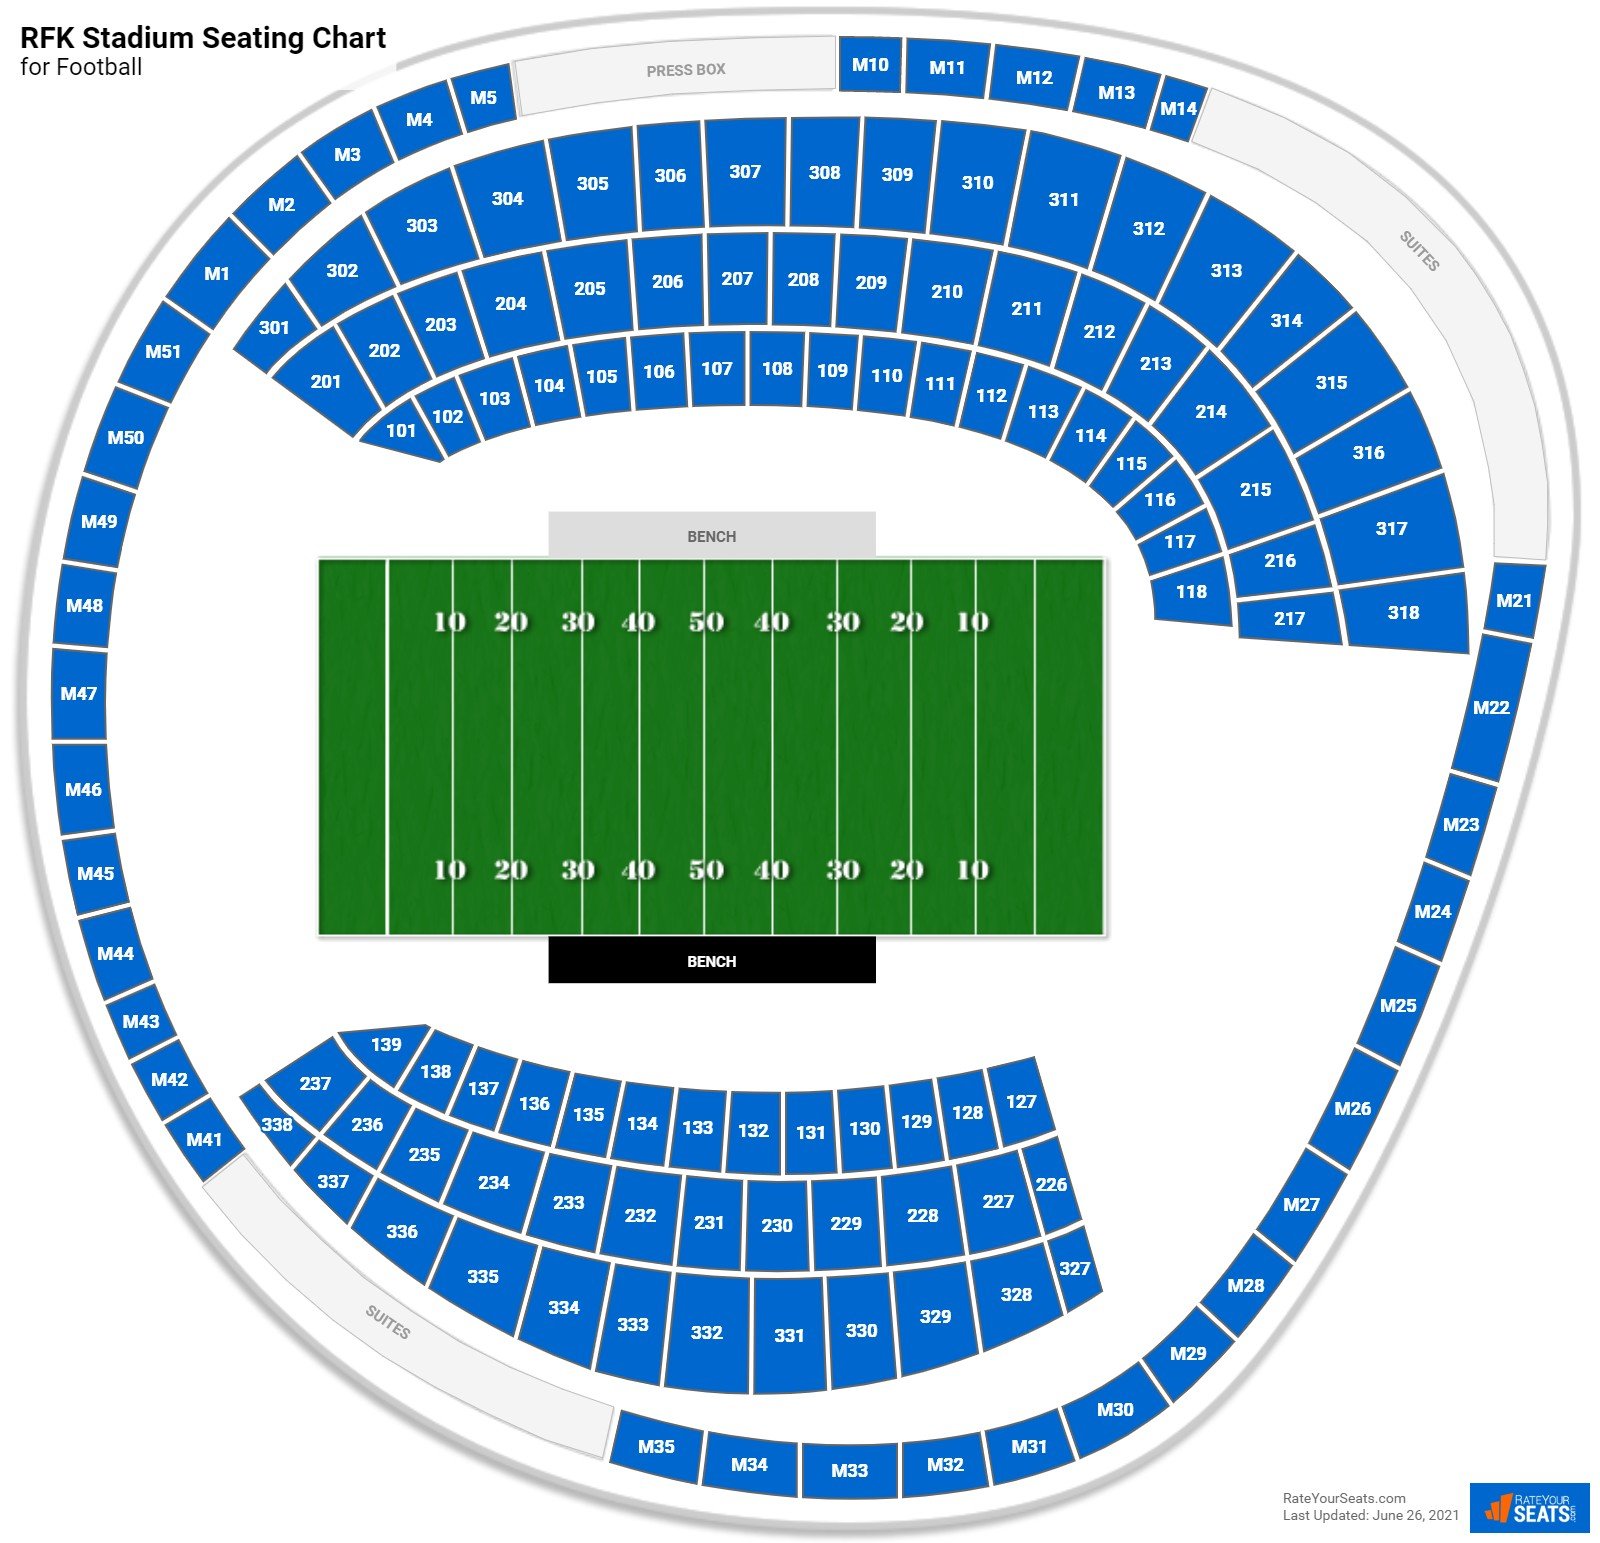 RFK Stadium Seating Charts for Football - RateYourSeats.com